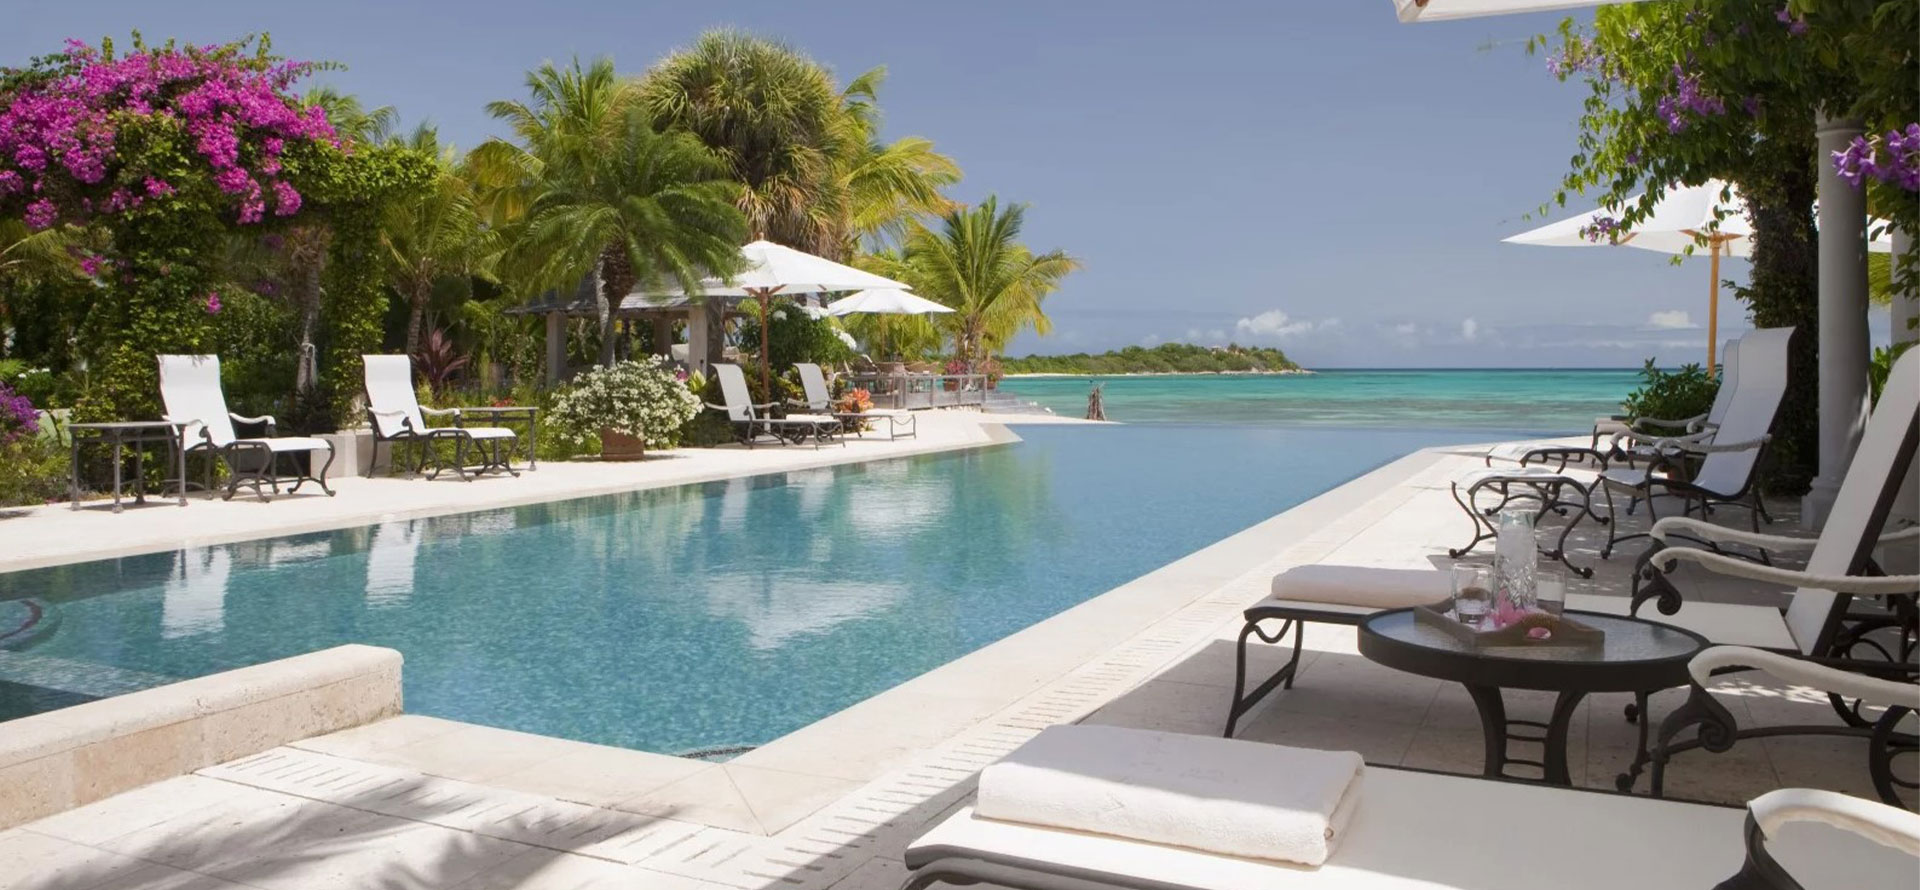 Antigua luxury resorts with ocean view pool.